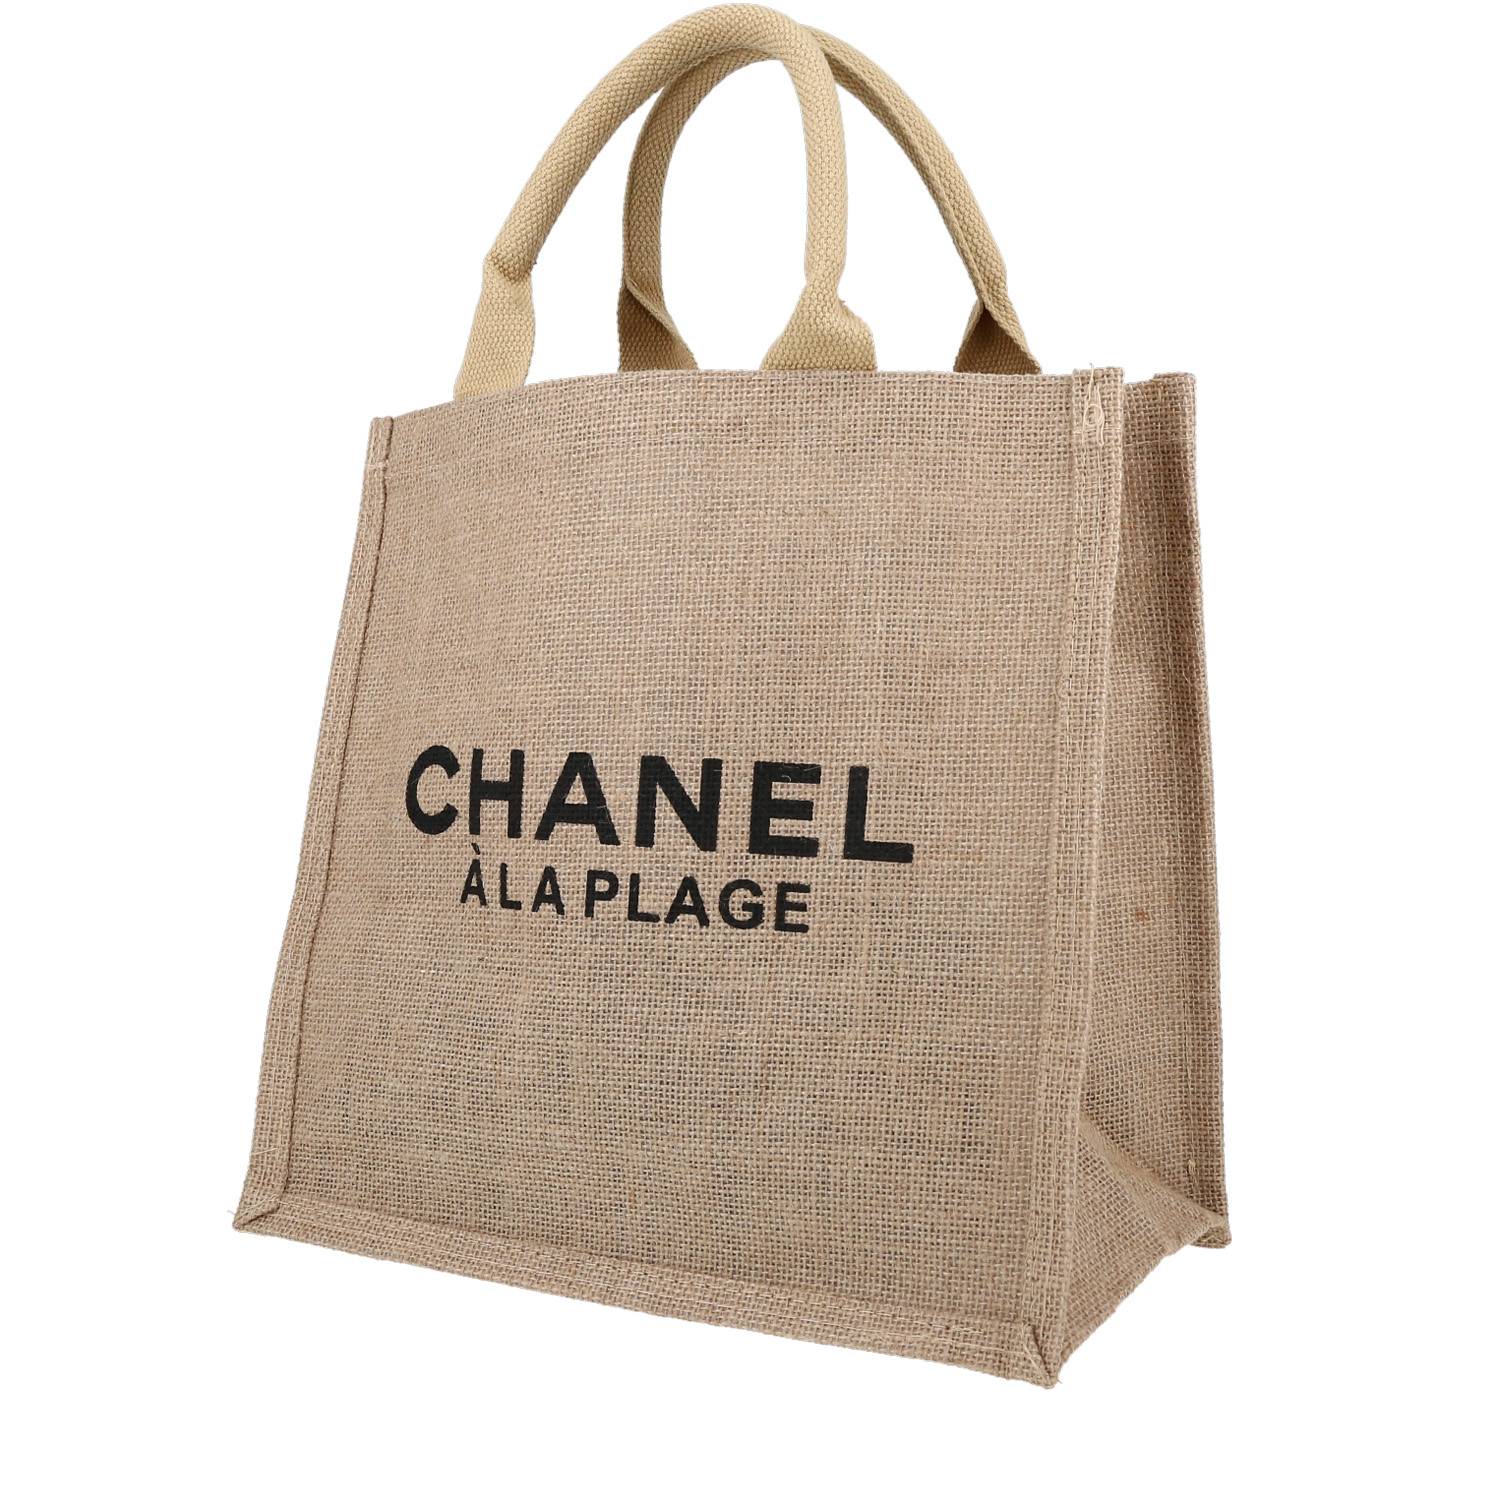 Chanel Tote Bag Beige Nylon